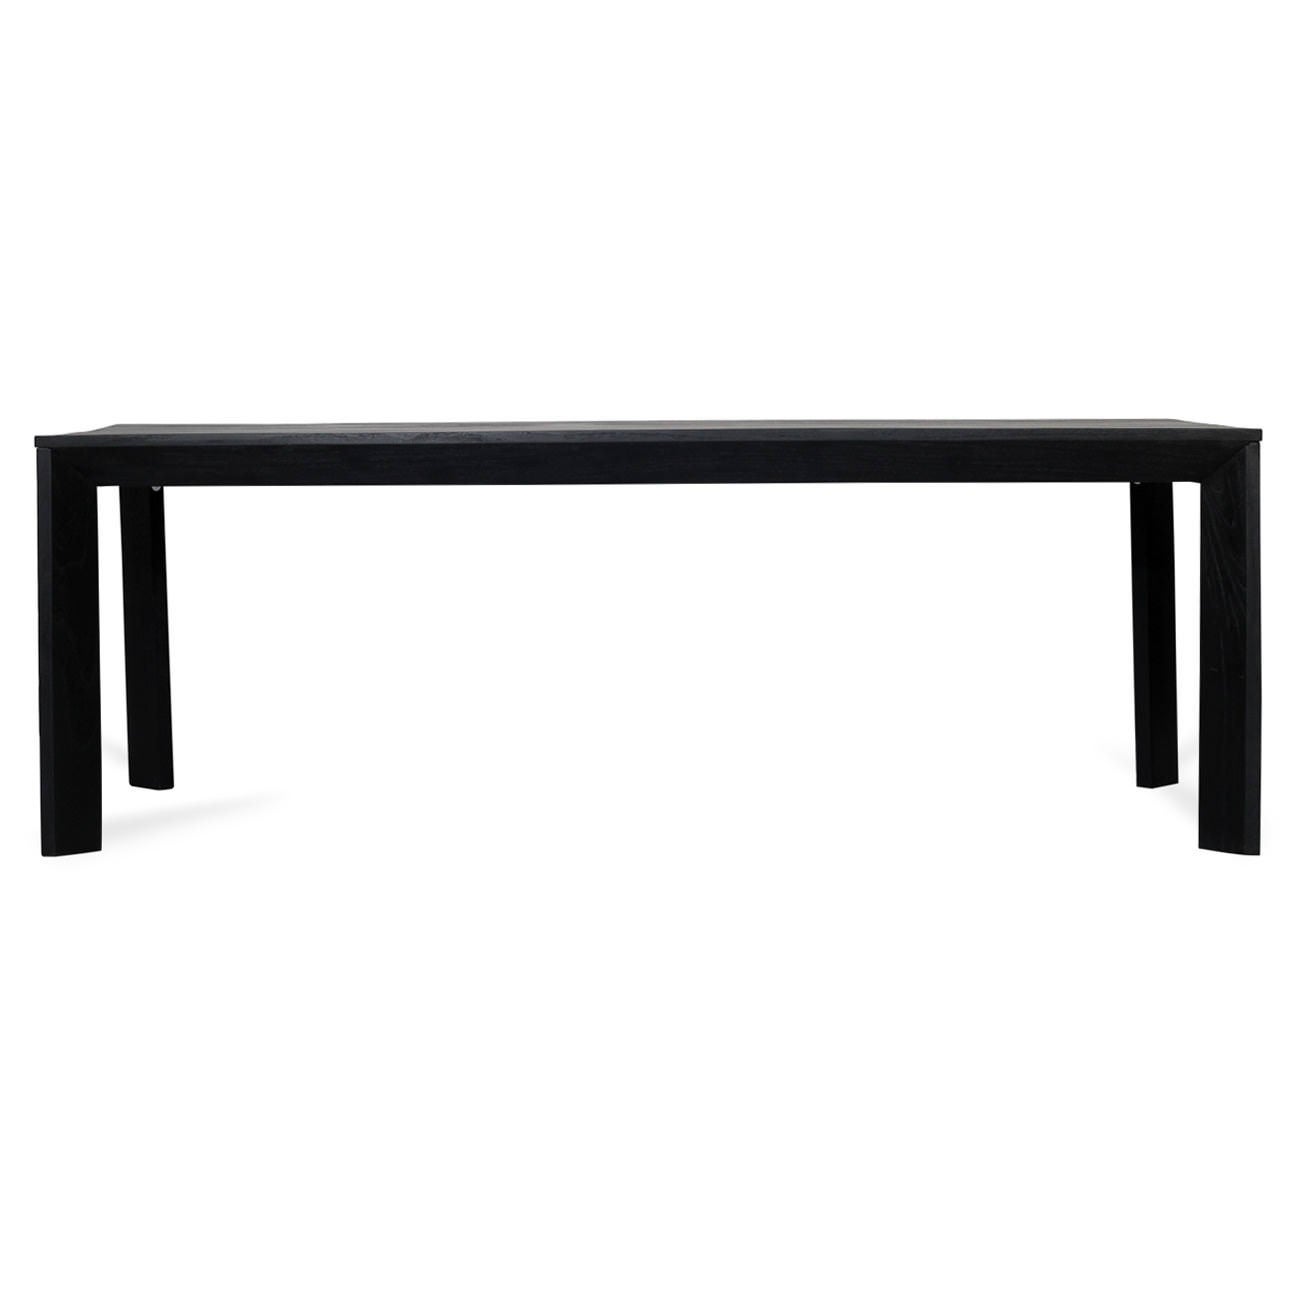 Parklea Teak Timber Dining Table, 280cm, Black